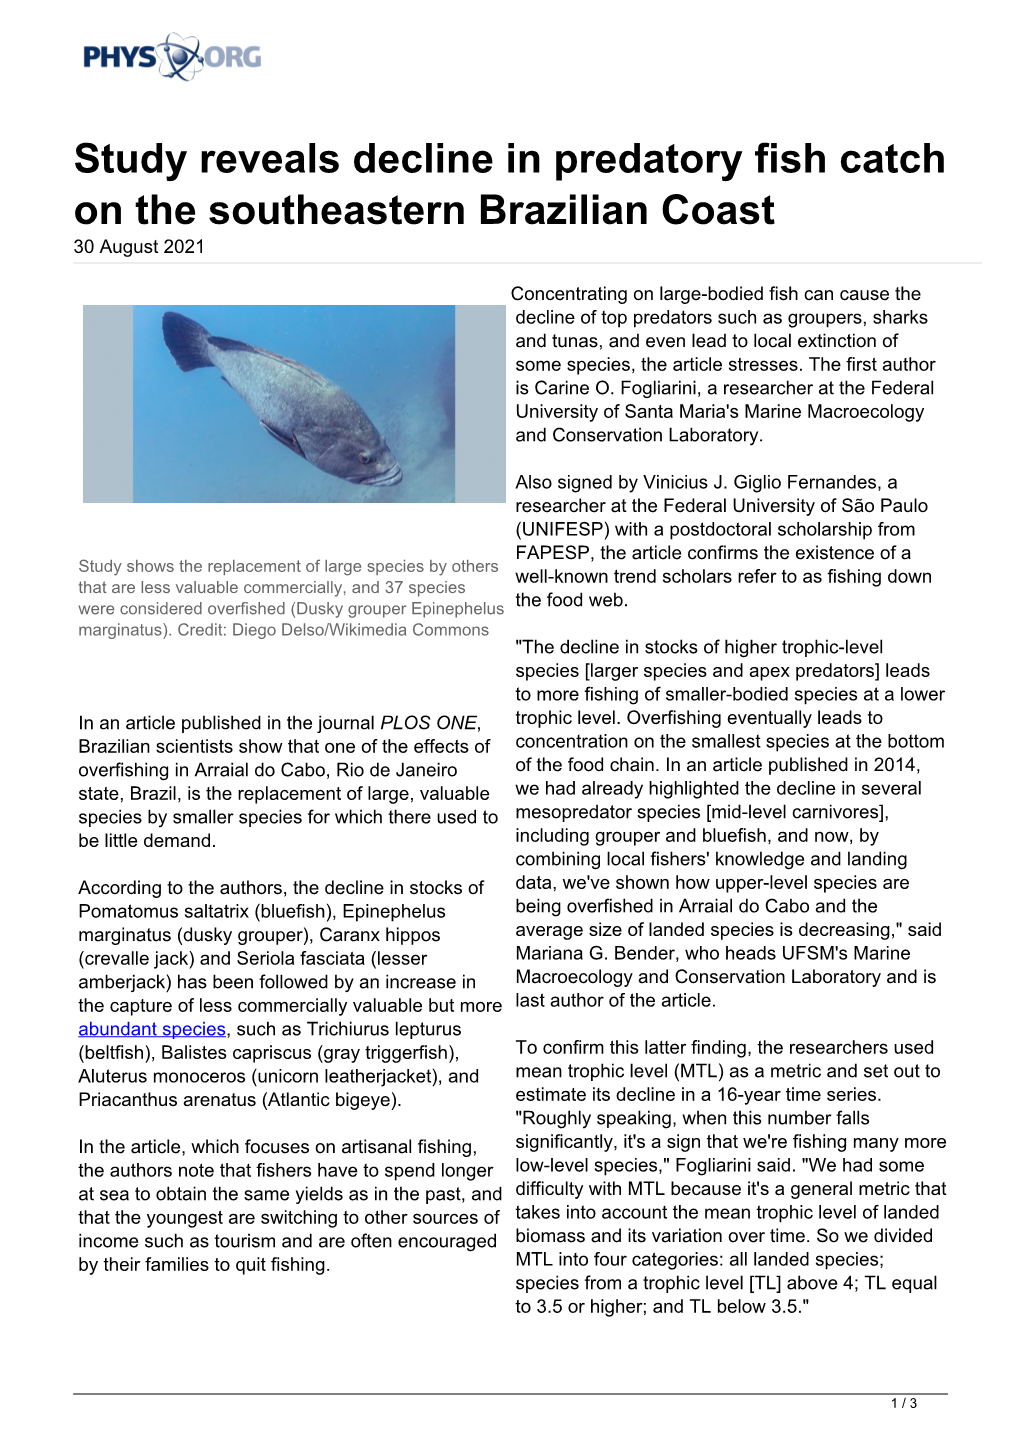 Study Reveals Decline in Predatory Fish Catch on the Southeastern Brazilian Coast 30 August 2021